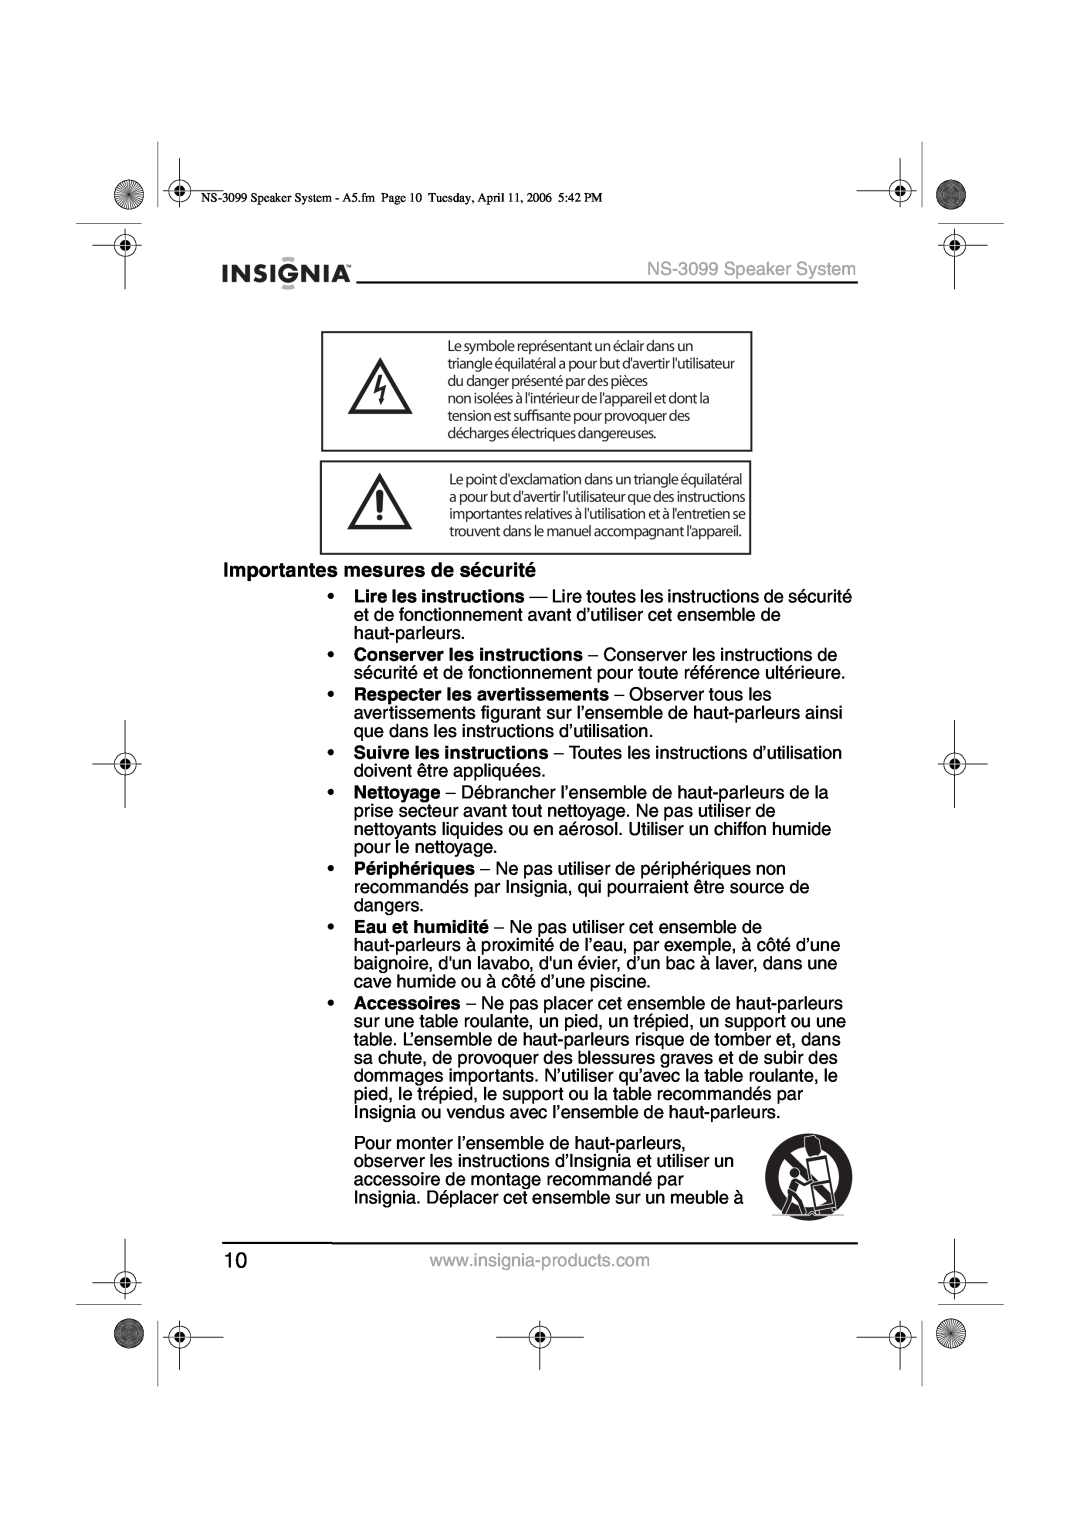 Insignia manual Importantes mesures de sécurité, NS-3099Speaker System 